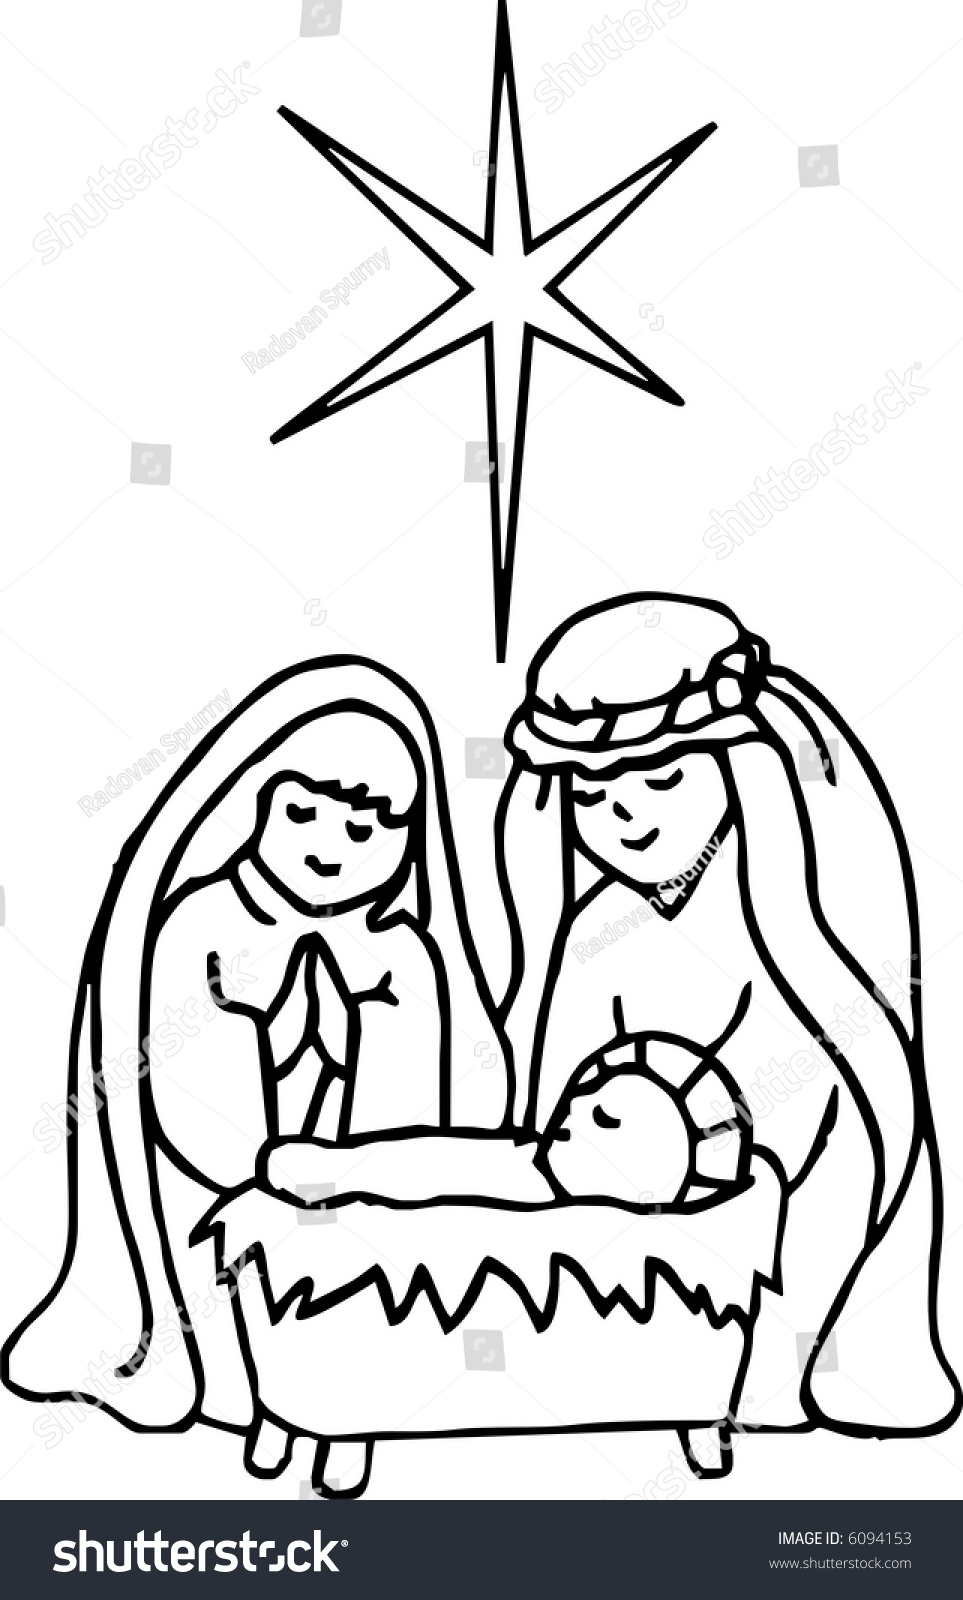 Baby Jesus Crib Stock Vector 6094153 - Shutterstock